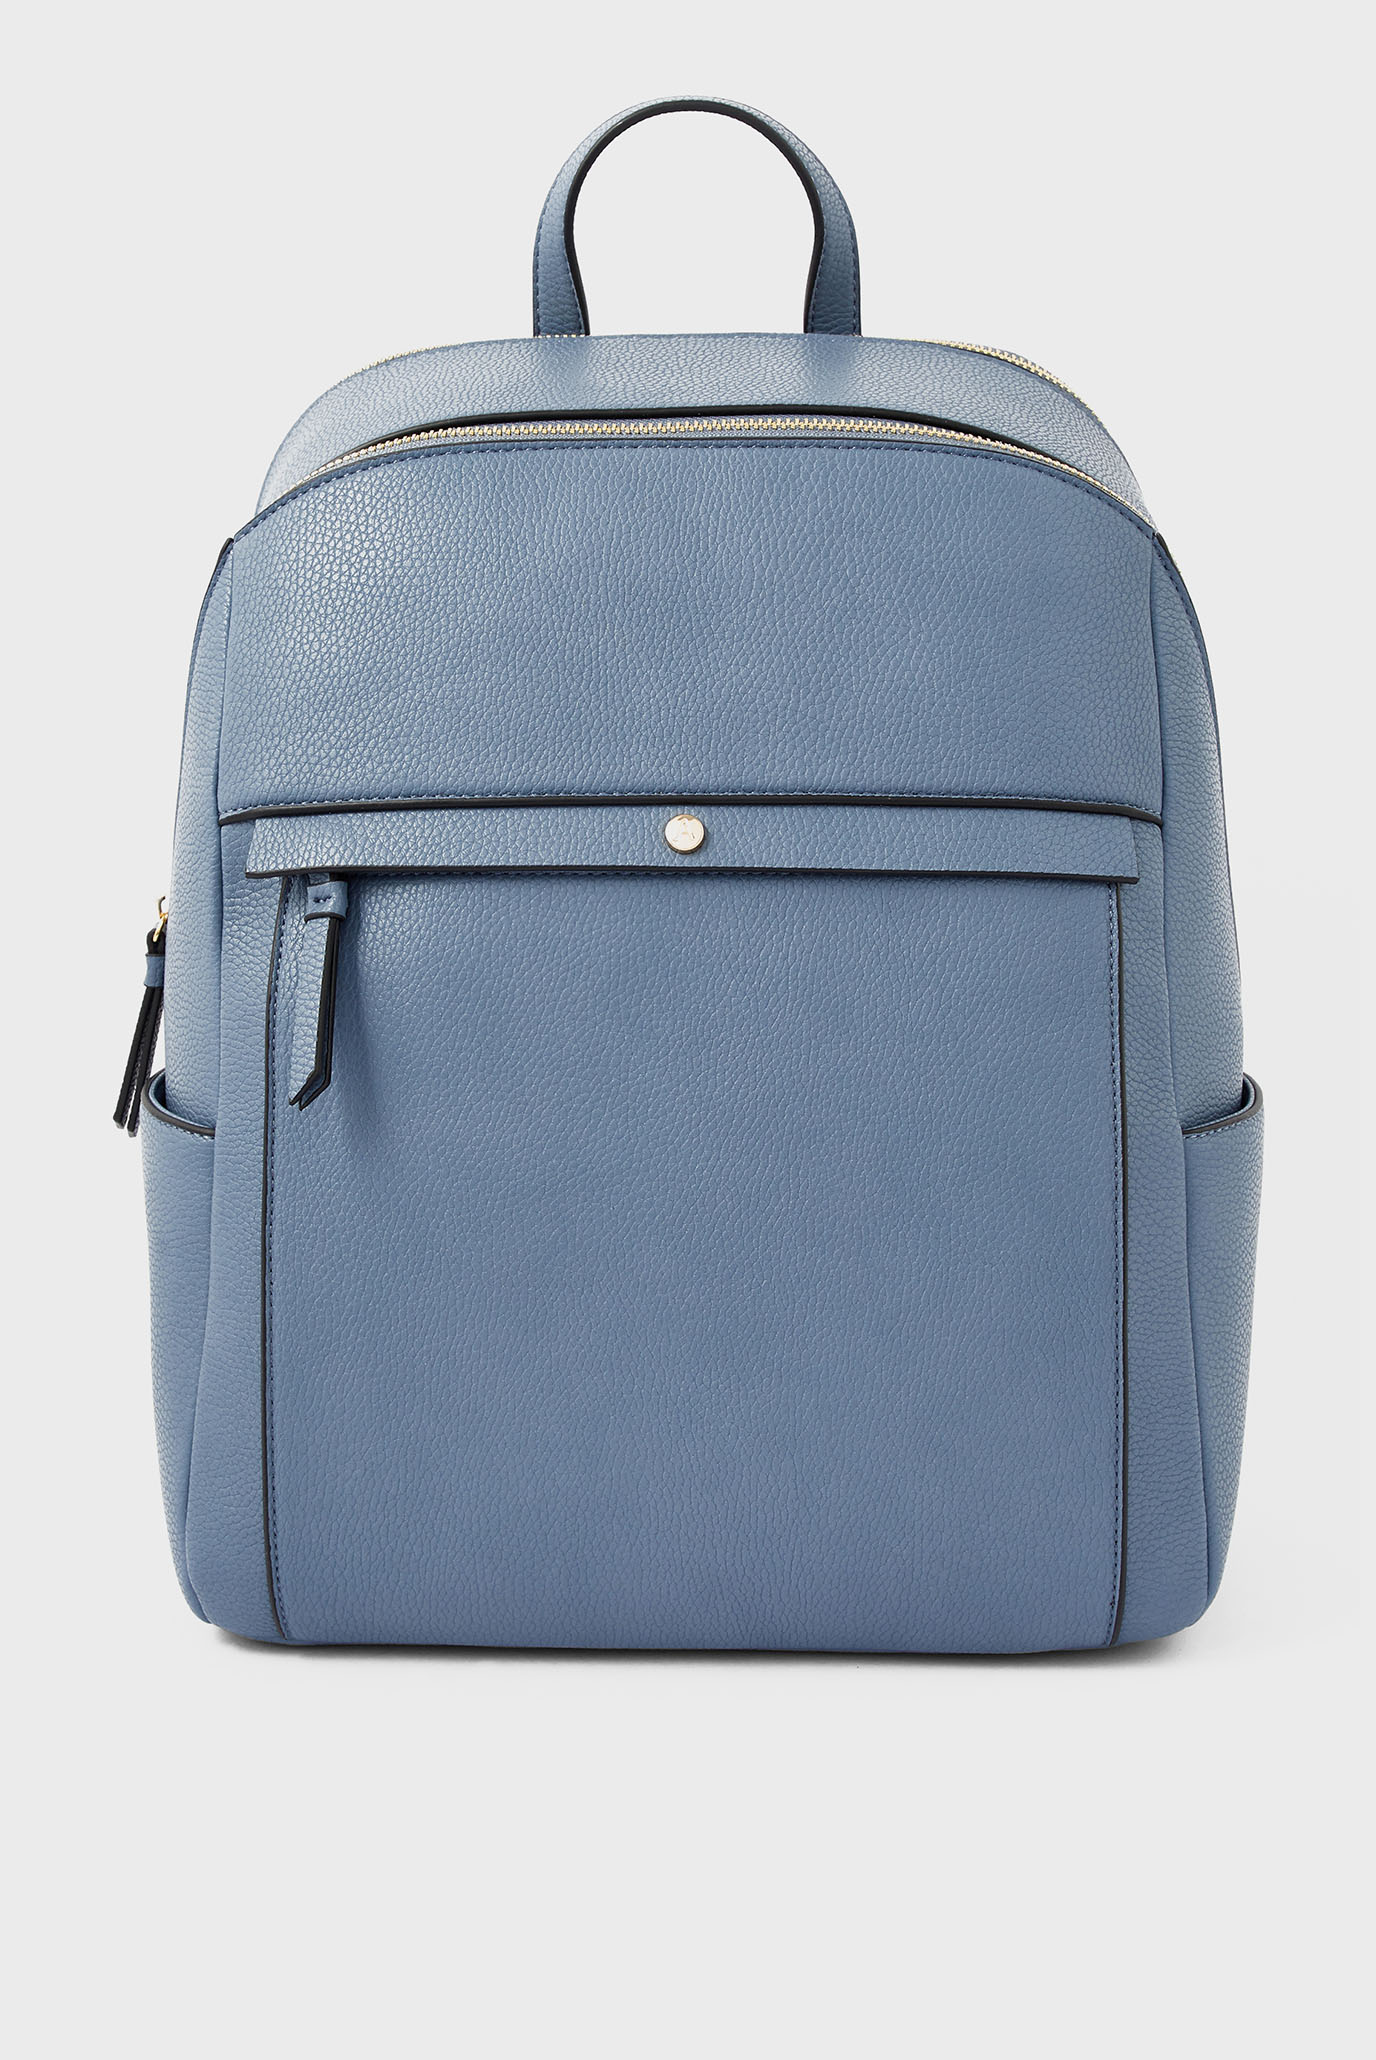 Жіночий блакитний рюкзак SAMMY BACKPACK 1